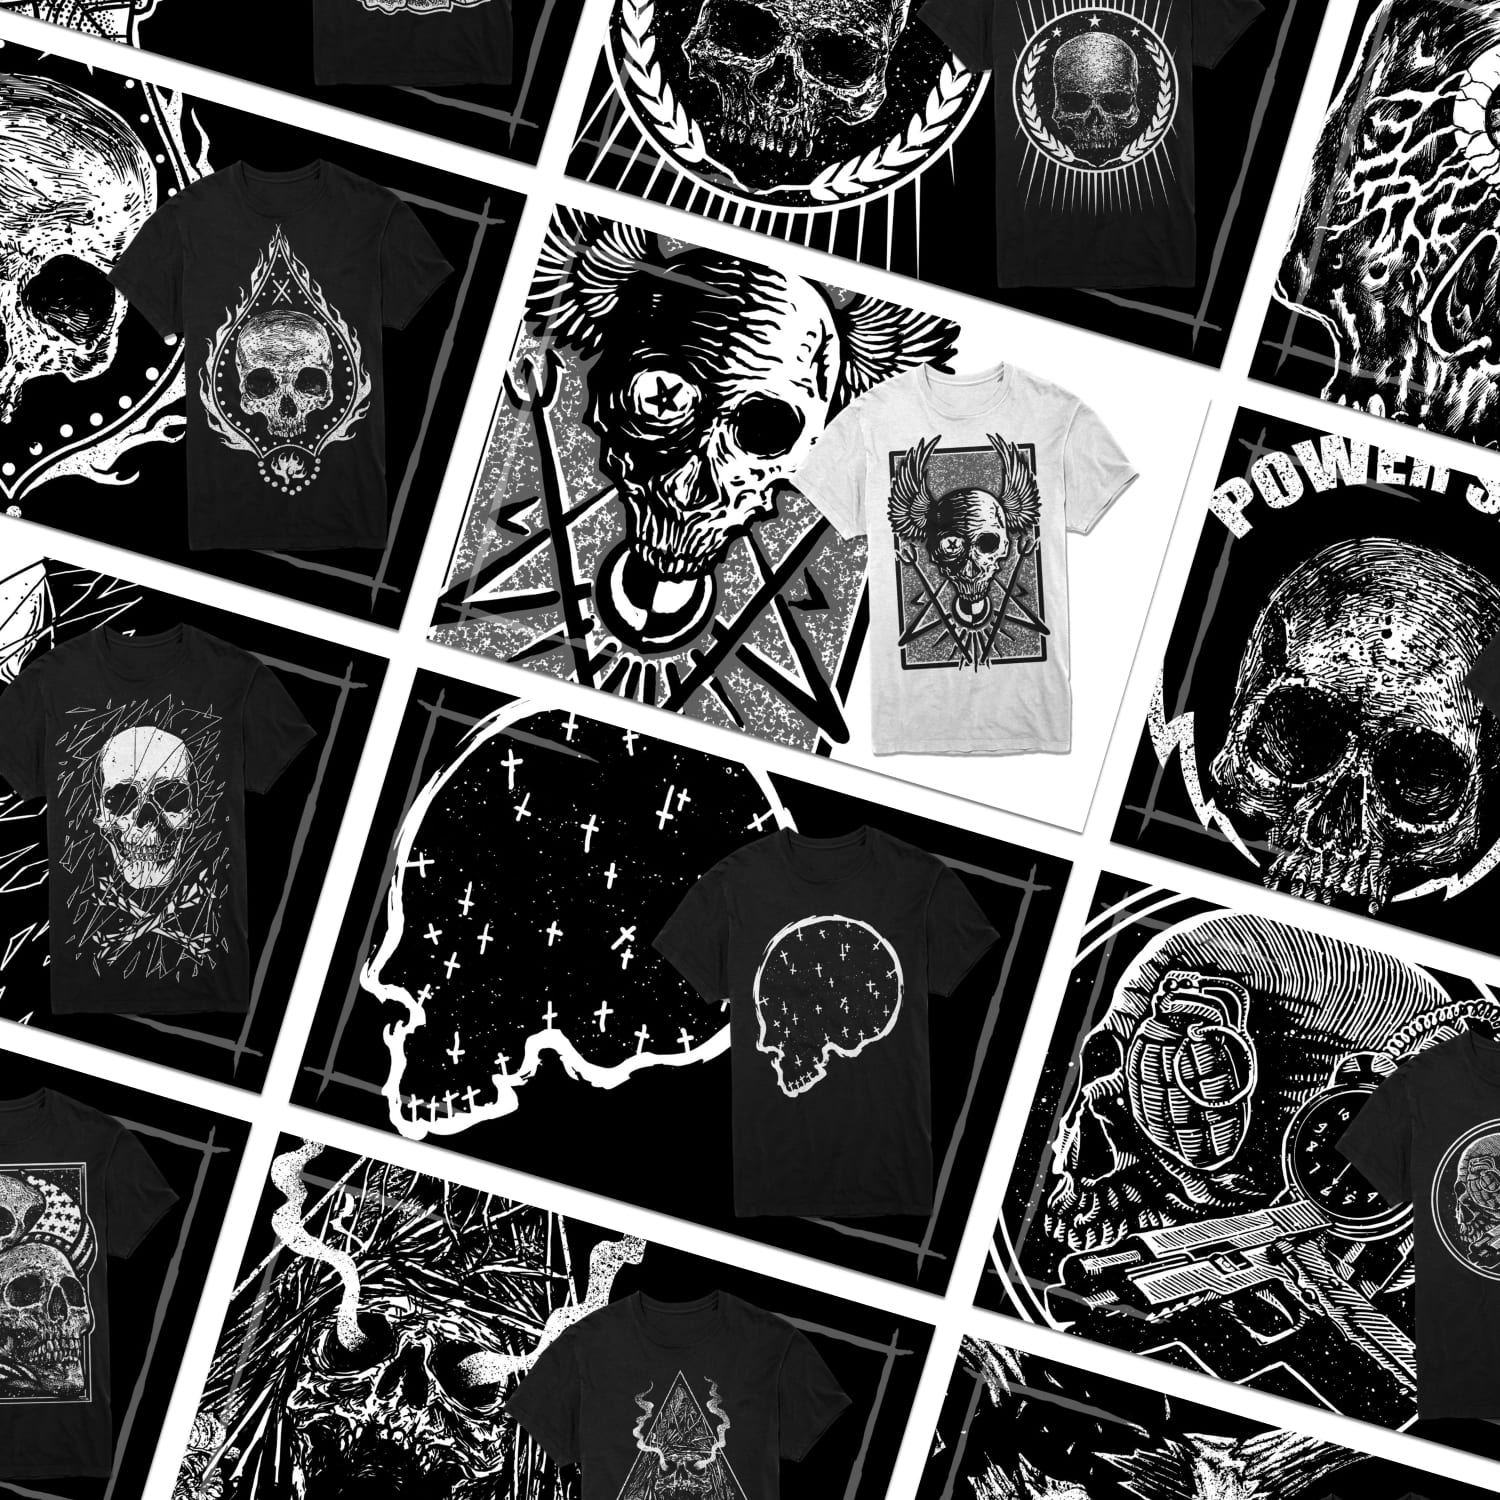 Skulls | T-shirt designs Bundle| Apparel | Merchandise cover.